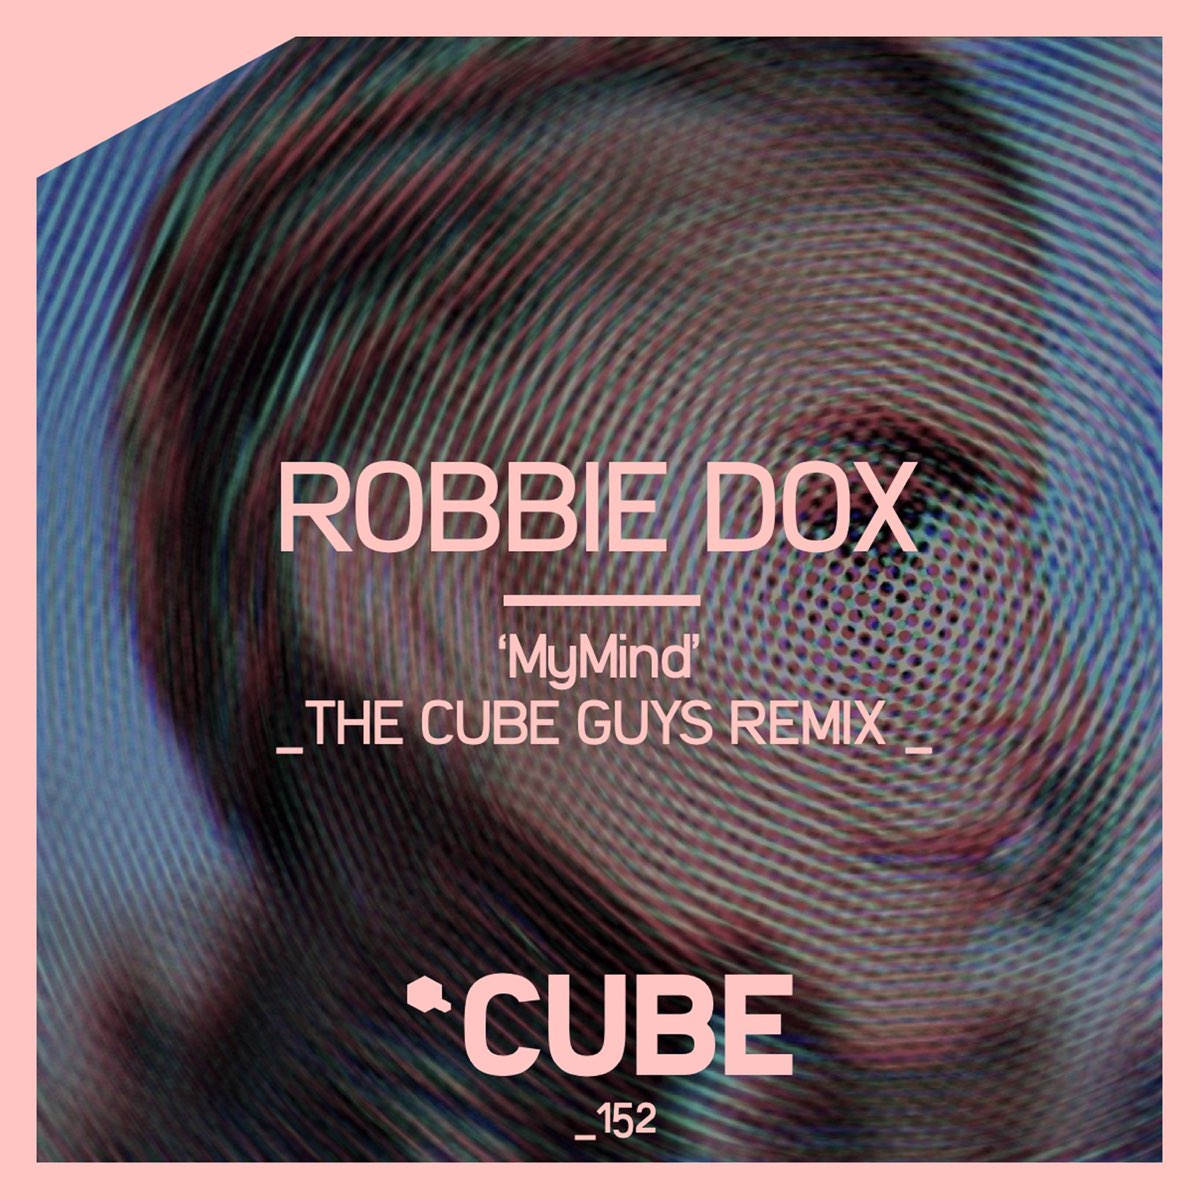 Cube remix. Cube guys группа. The Cube guys.